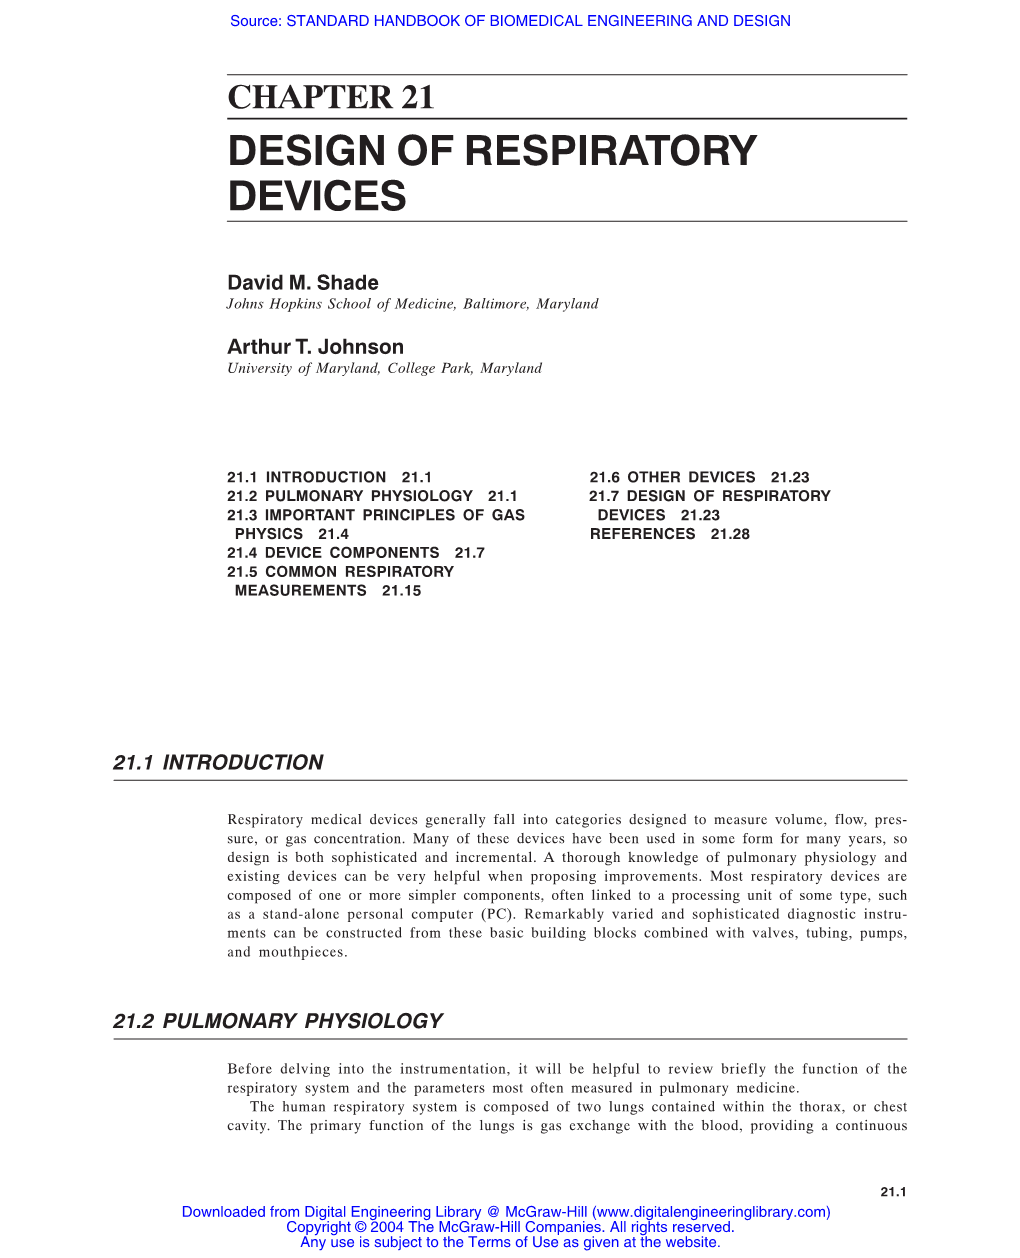 Design of Respiratory Devices